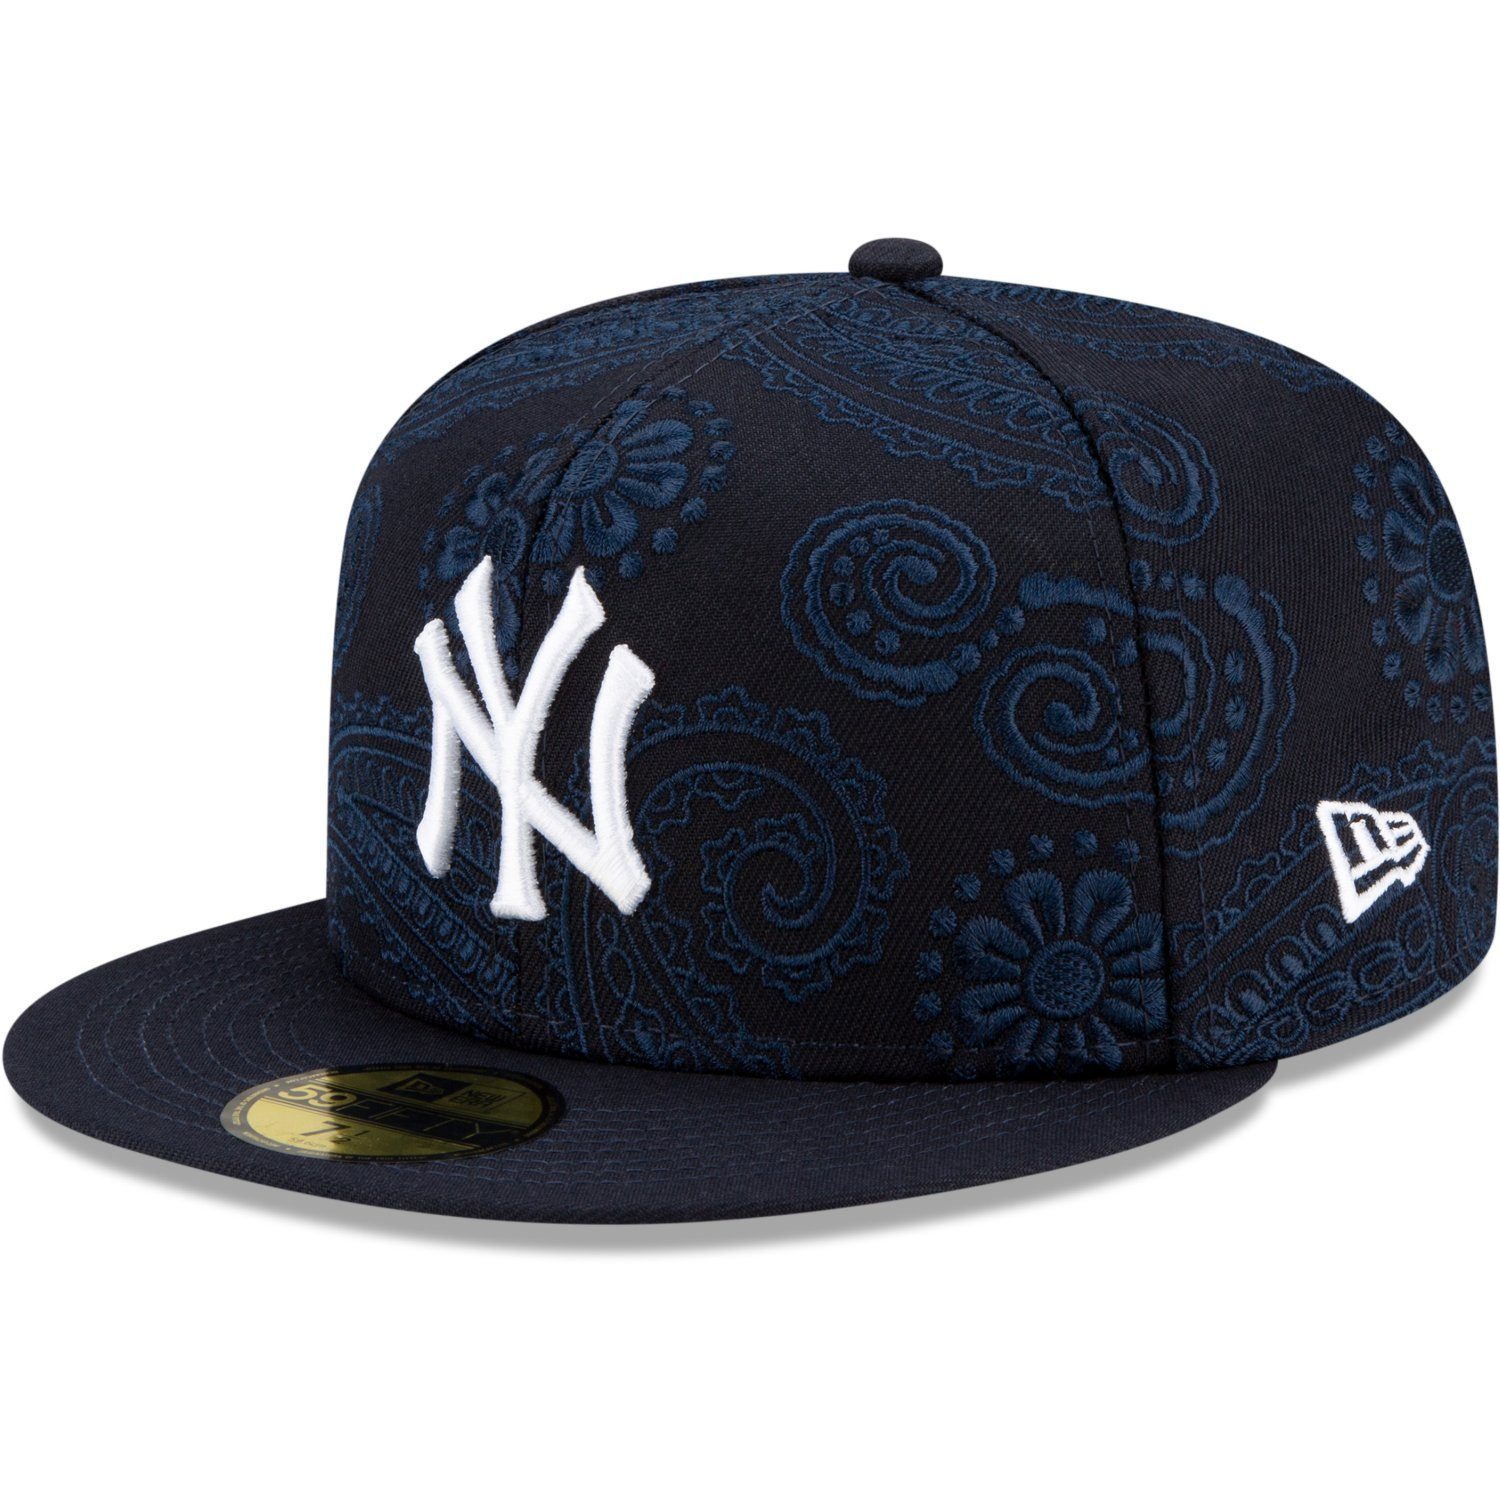 New Era Fitted Cap 59Fifty SWIRL PAISLEY New York Yankees